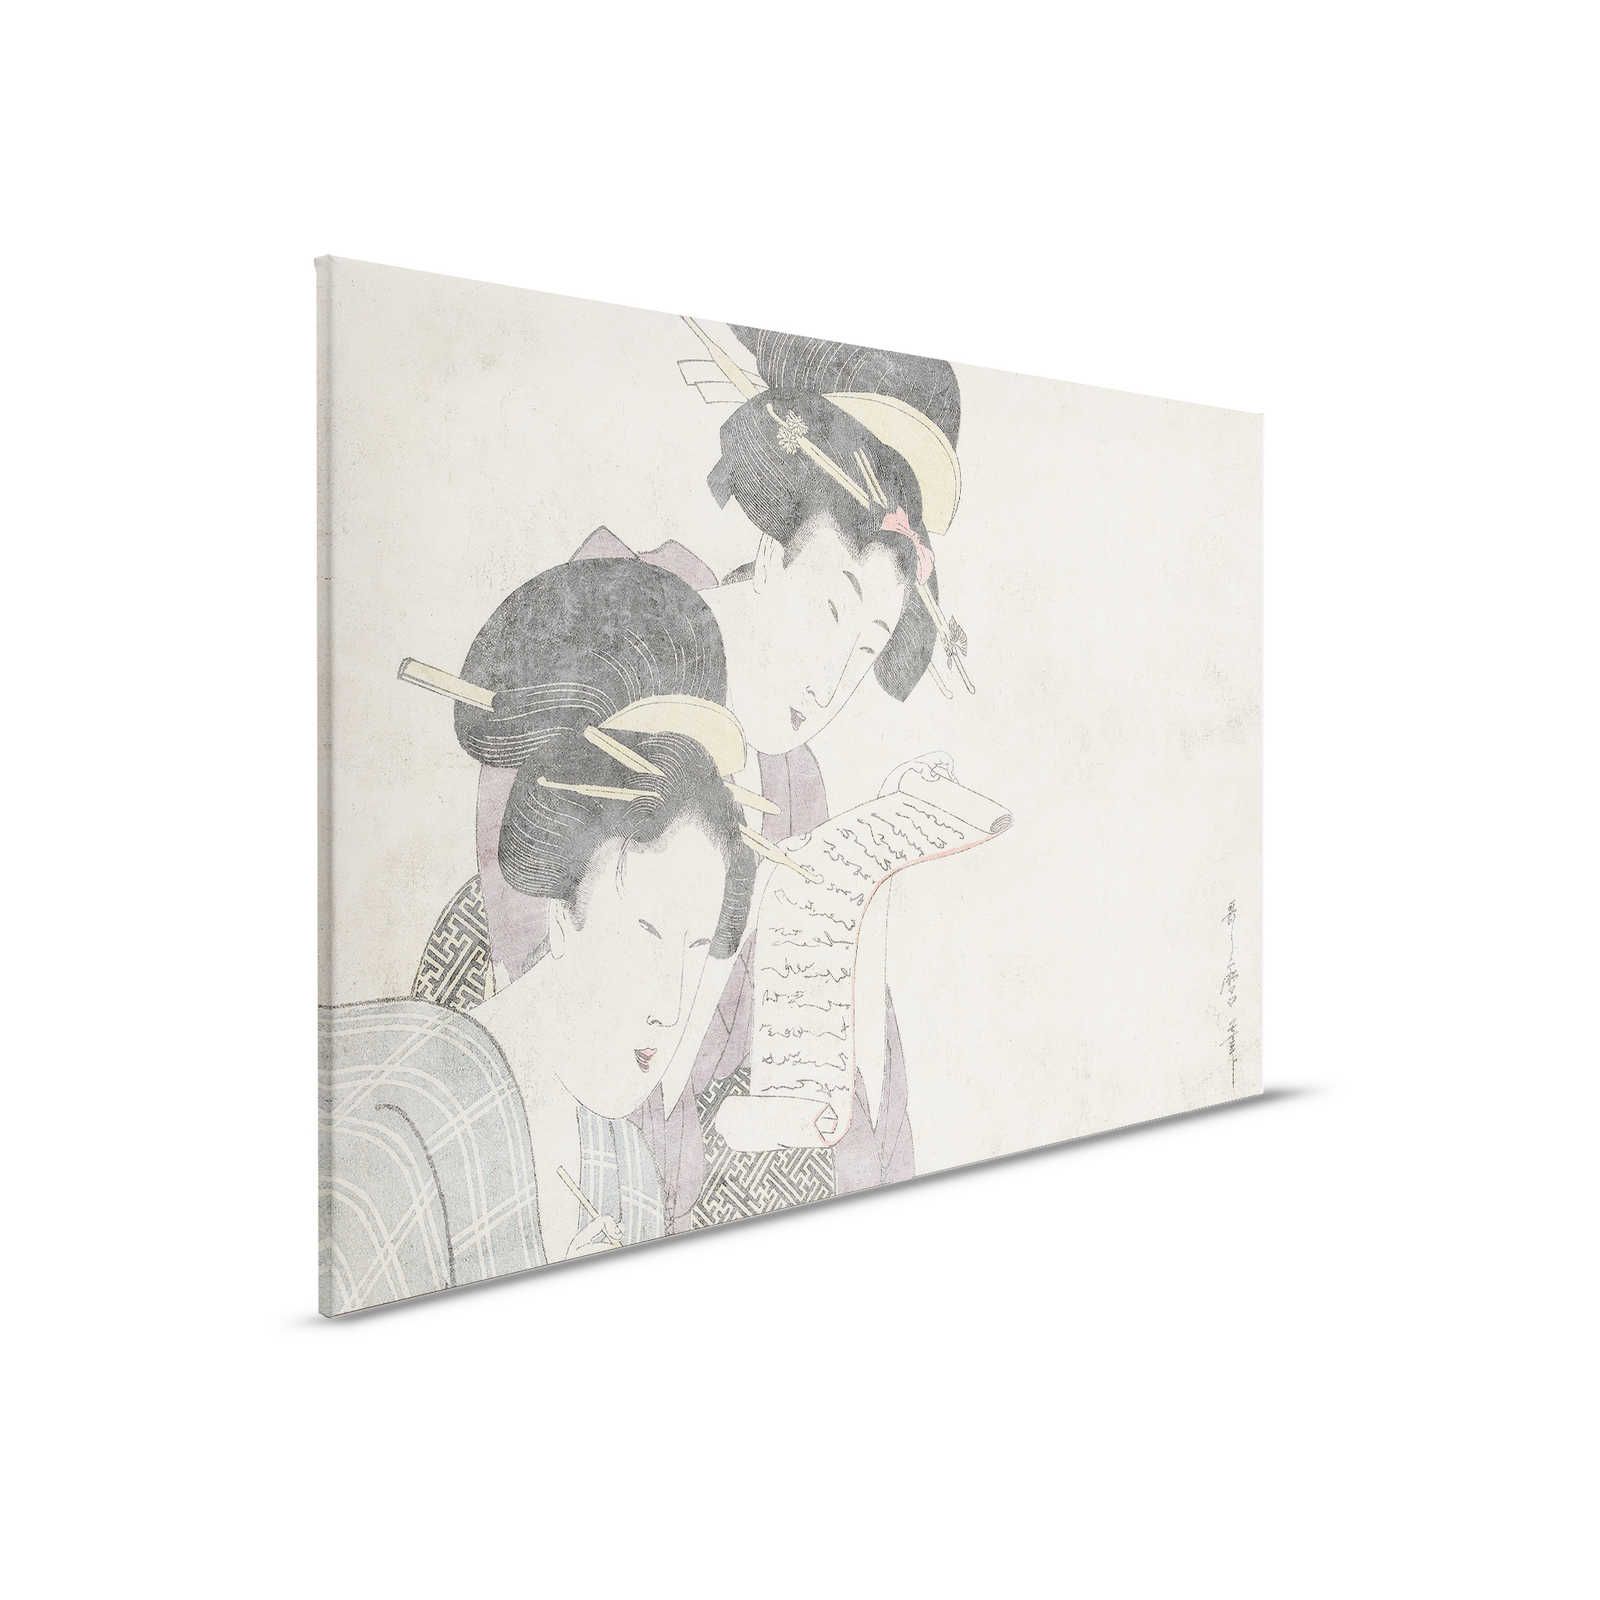 Osaka 3 - Lienzo Asiático Dibujo Vintage y Textura de Yeso - 0.90 m x 0.60 m
